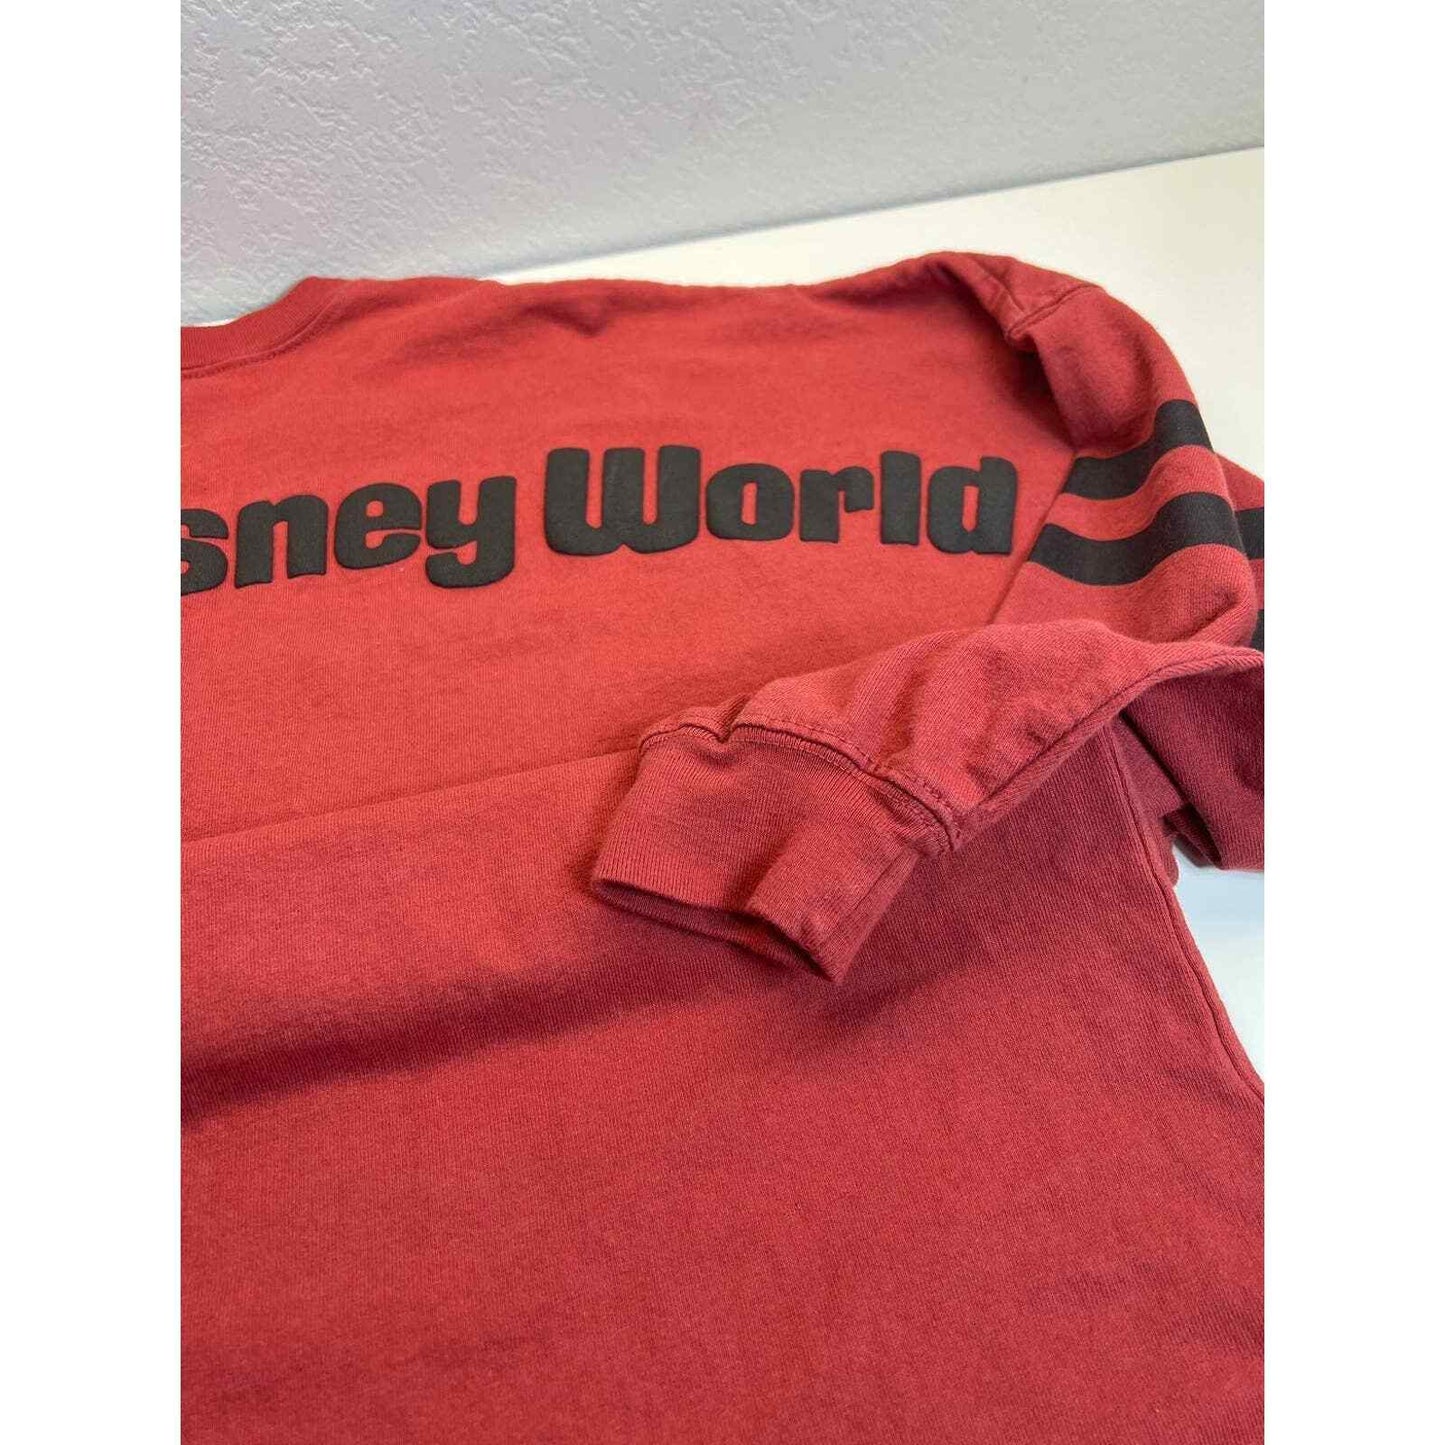 Walt Disney World Men's Jersey Medium Brick Red Vintage Sweater Clothing Adults